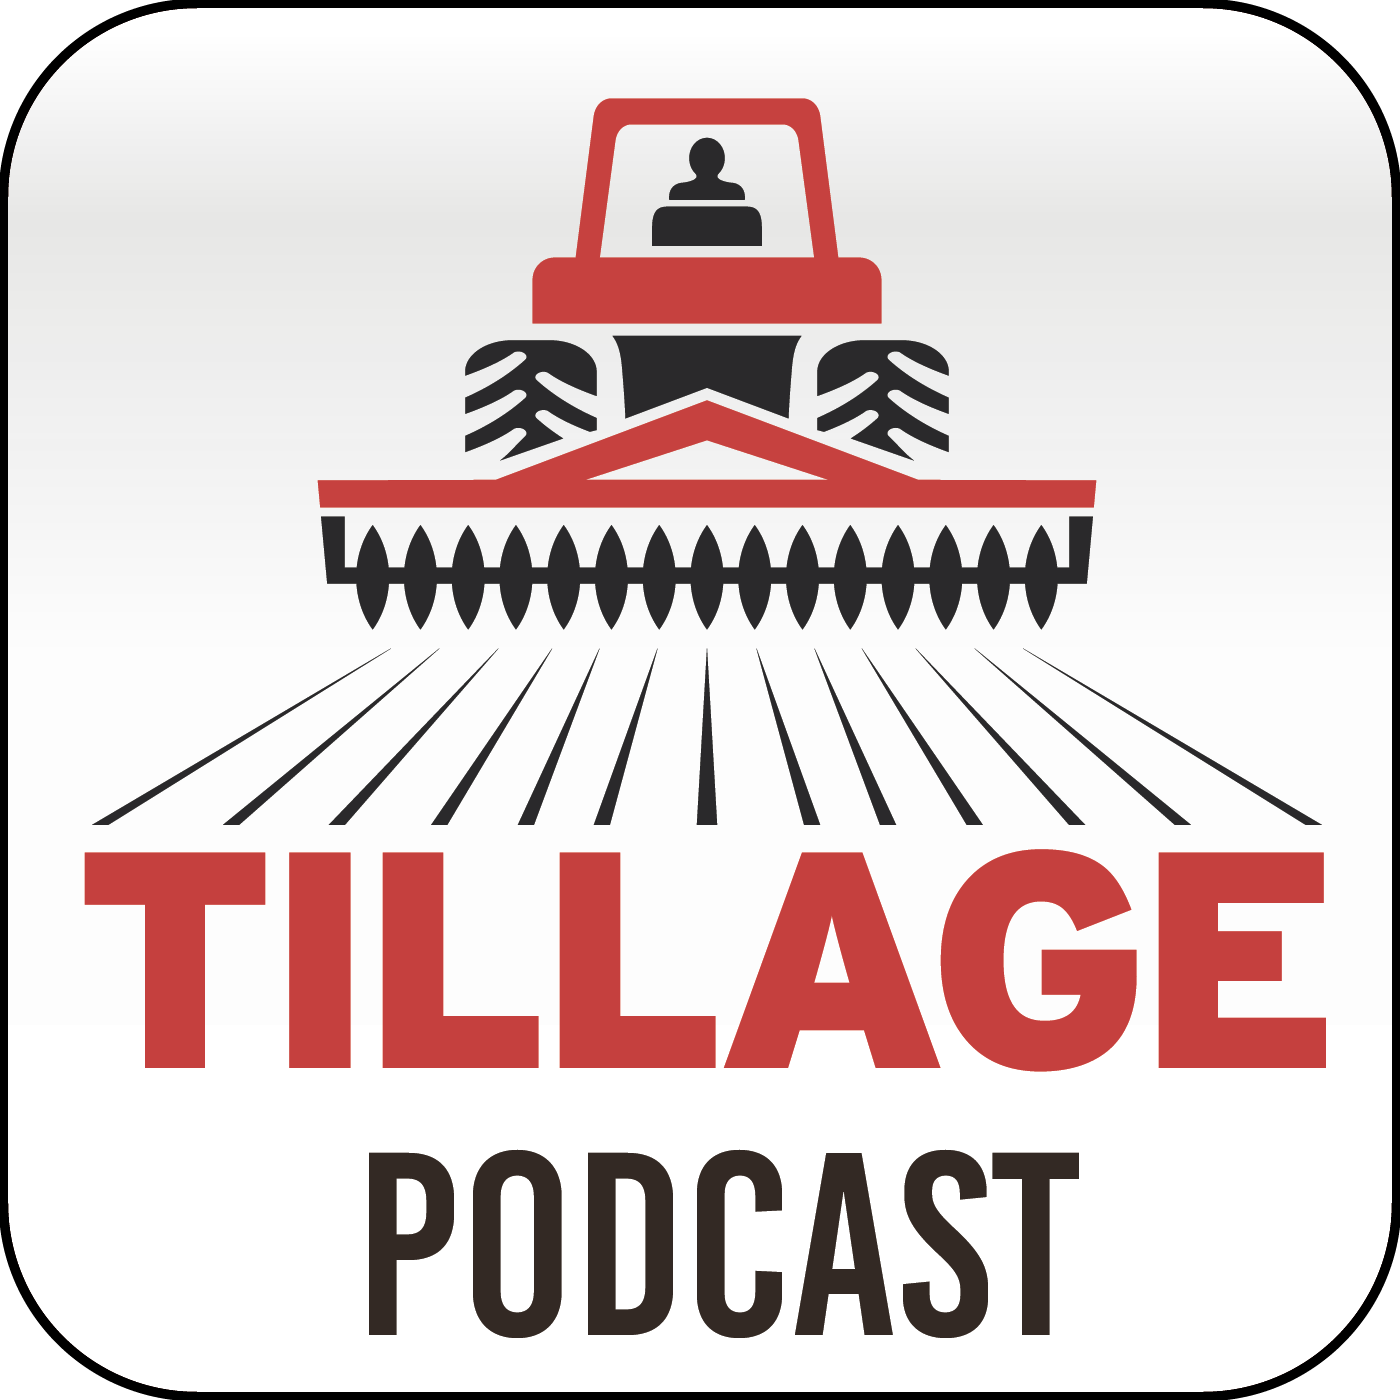 Ep 996: Tillage podcast: tillage area “being eroded” - Minister